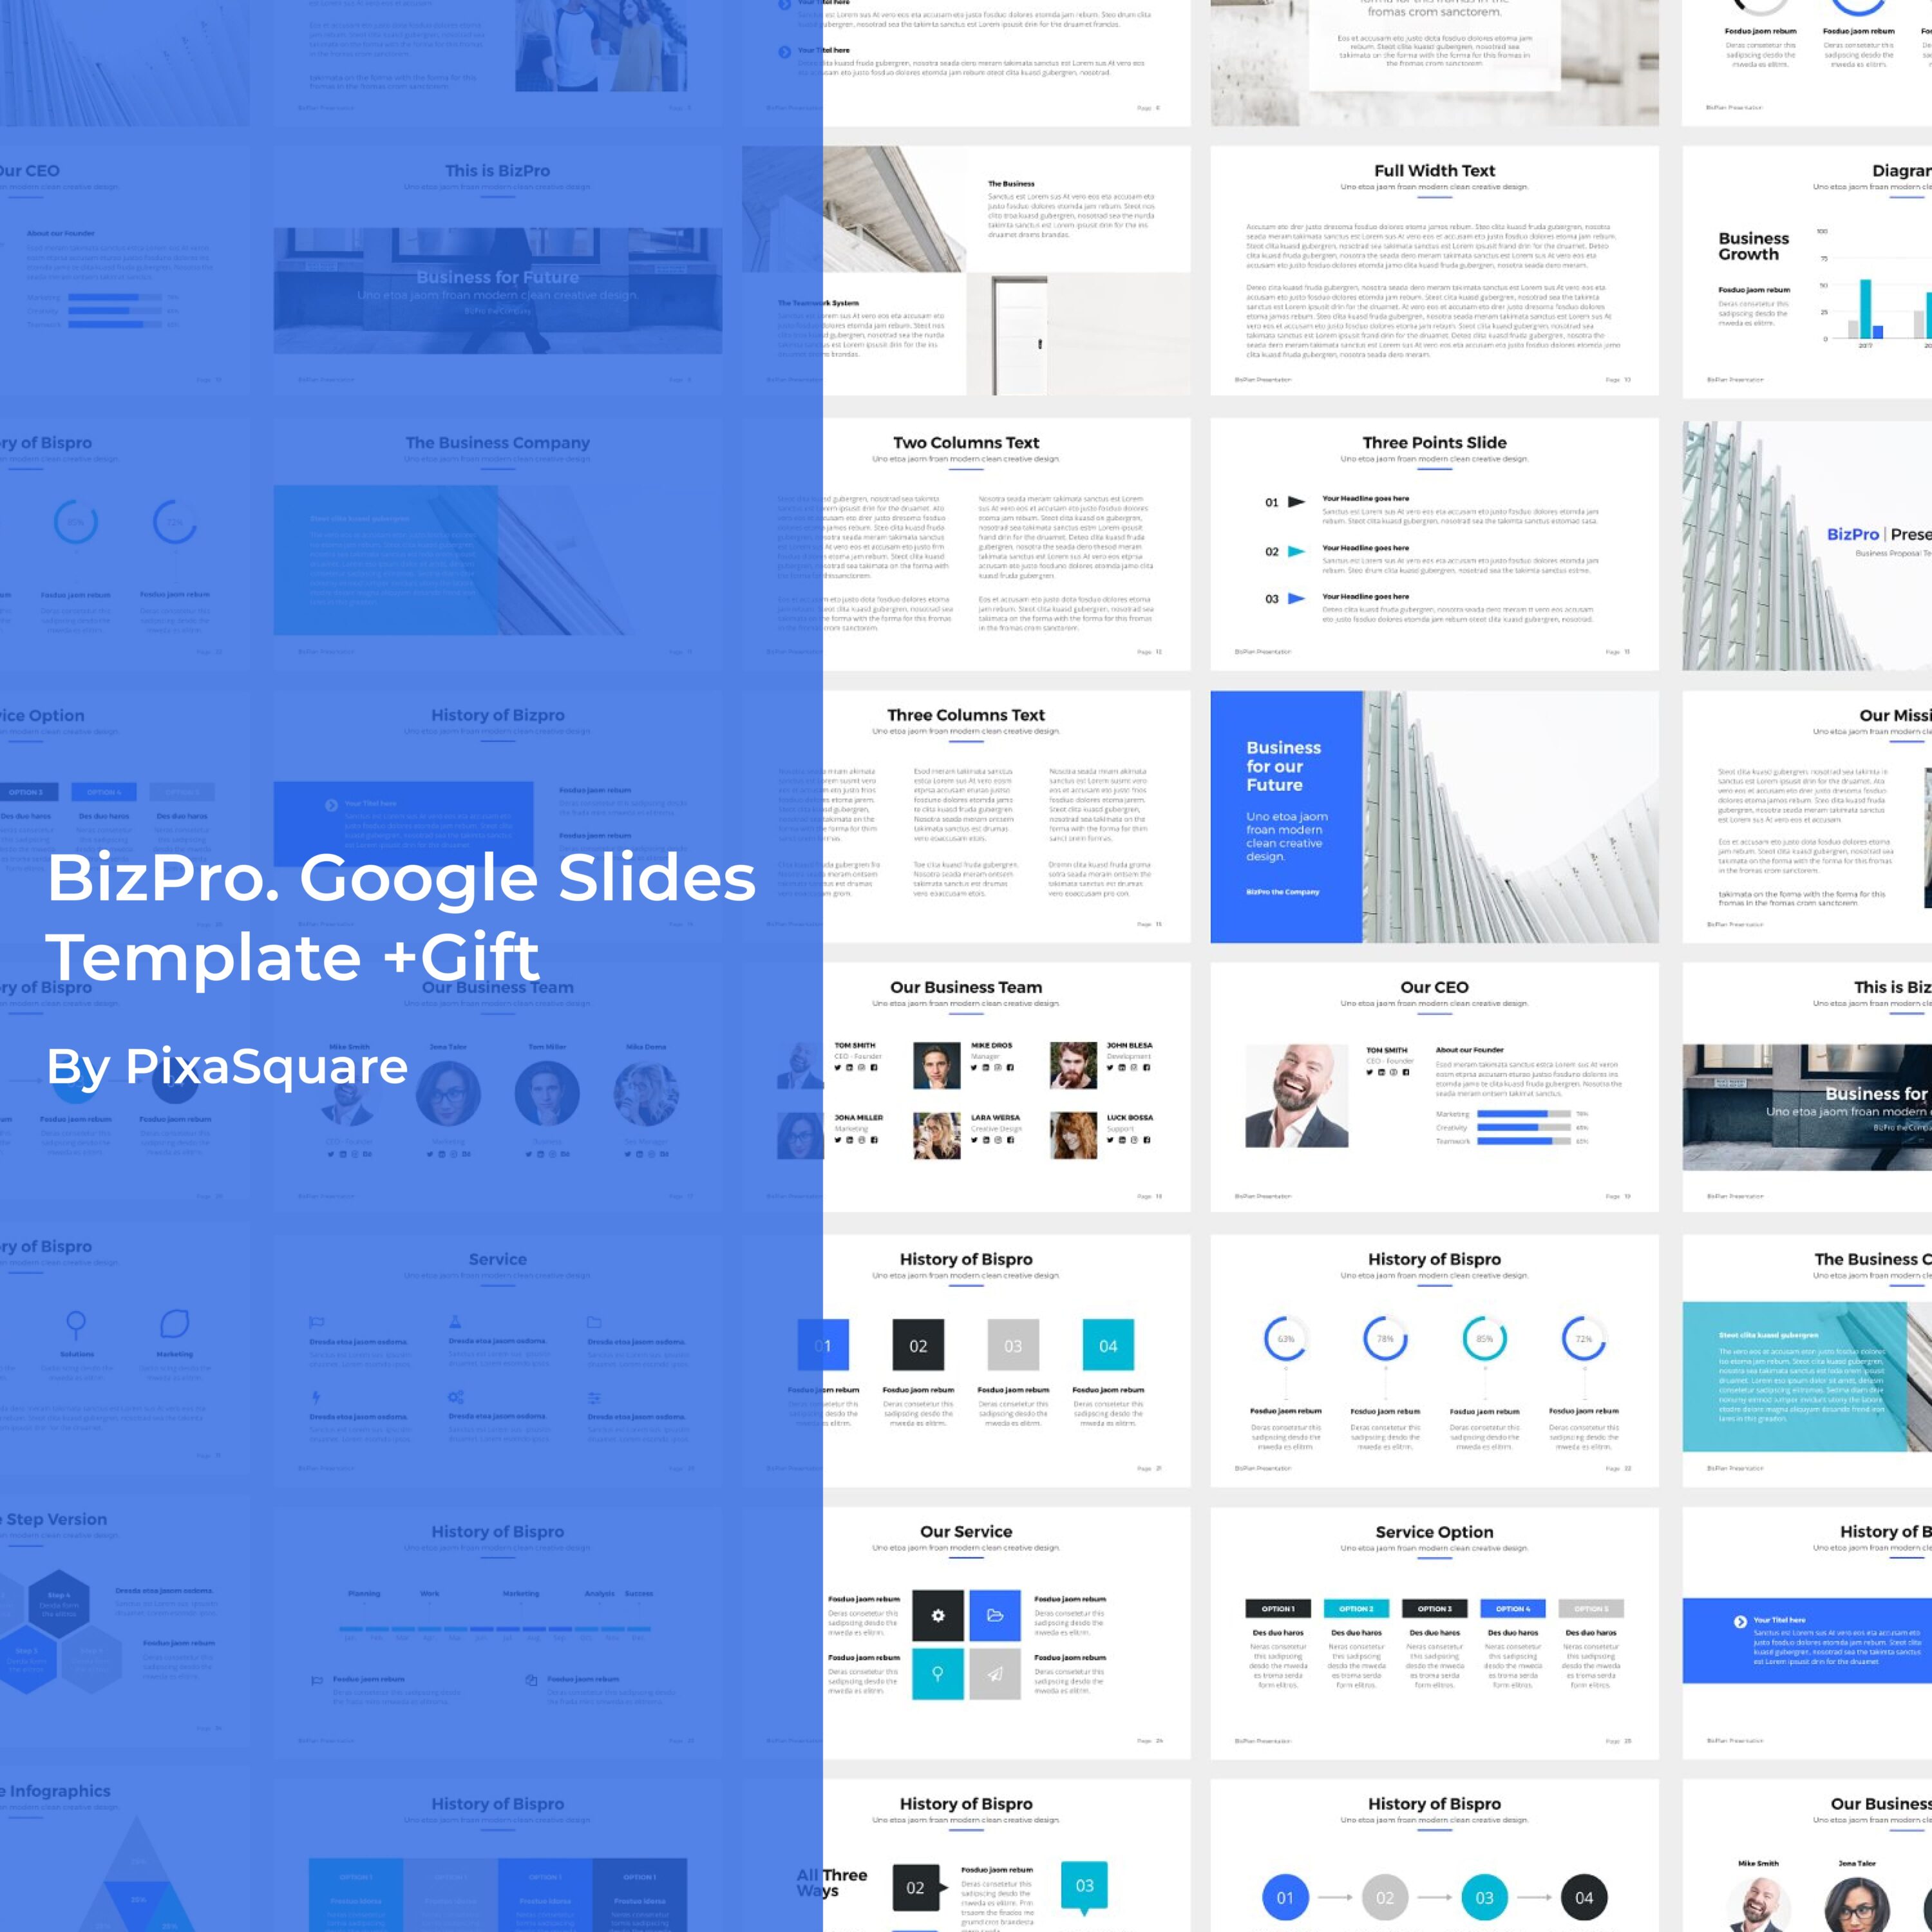 BizPro. Google Slides Template +Gift cover.